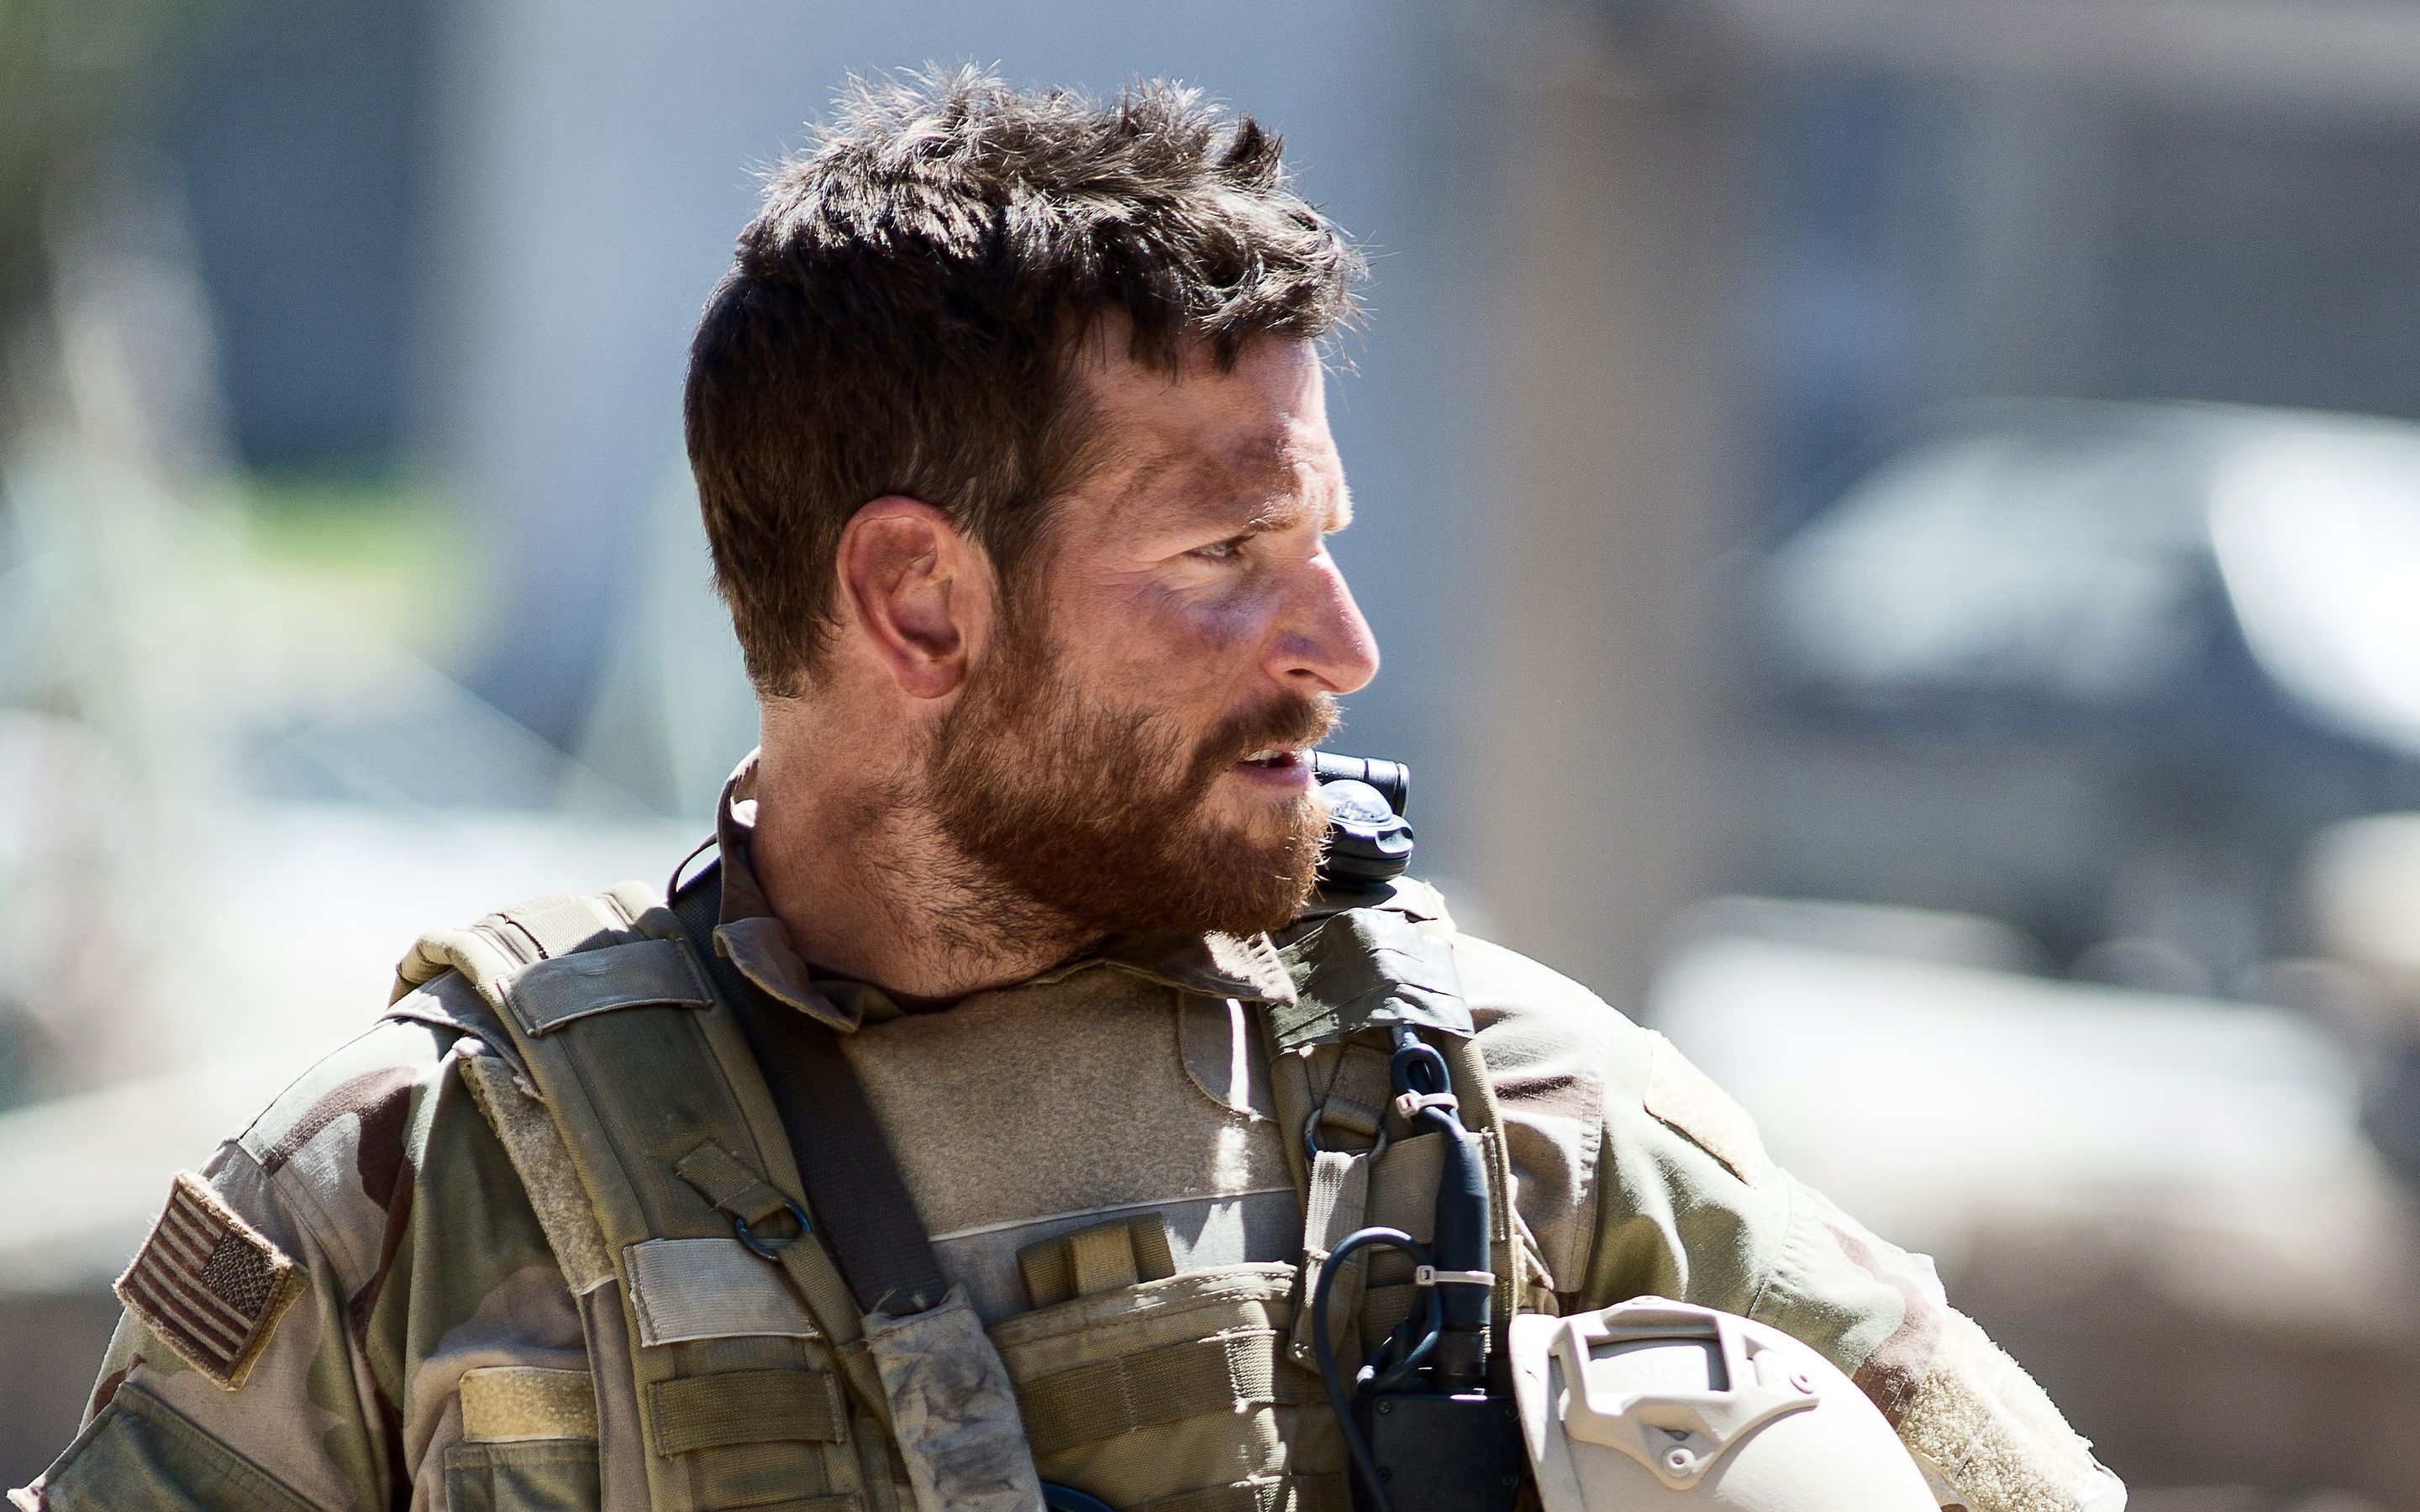 Bradley Cooper in American Sniper for 2880 x 1800 Retina Display resolution